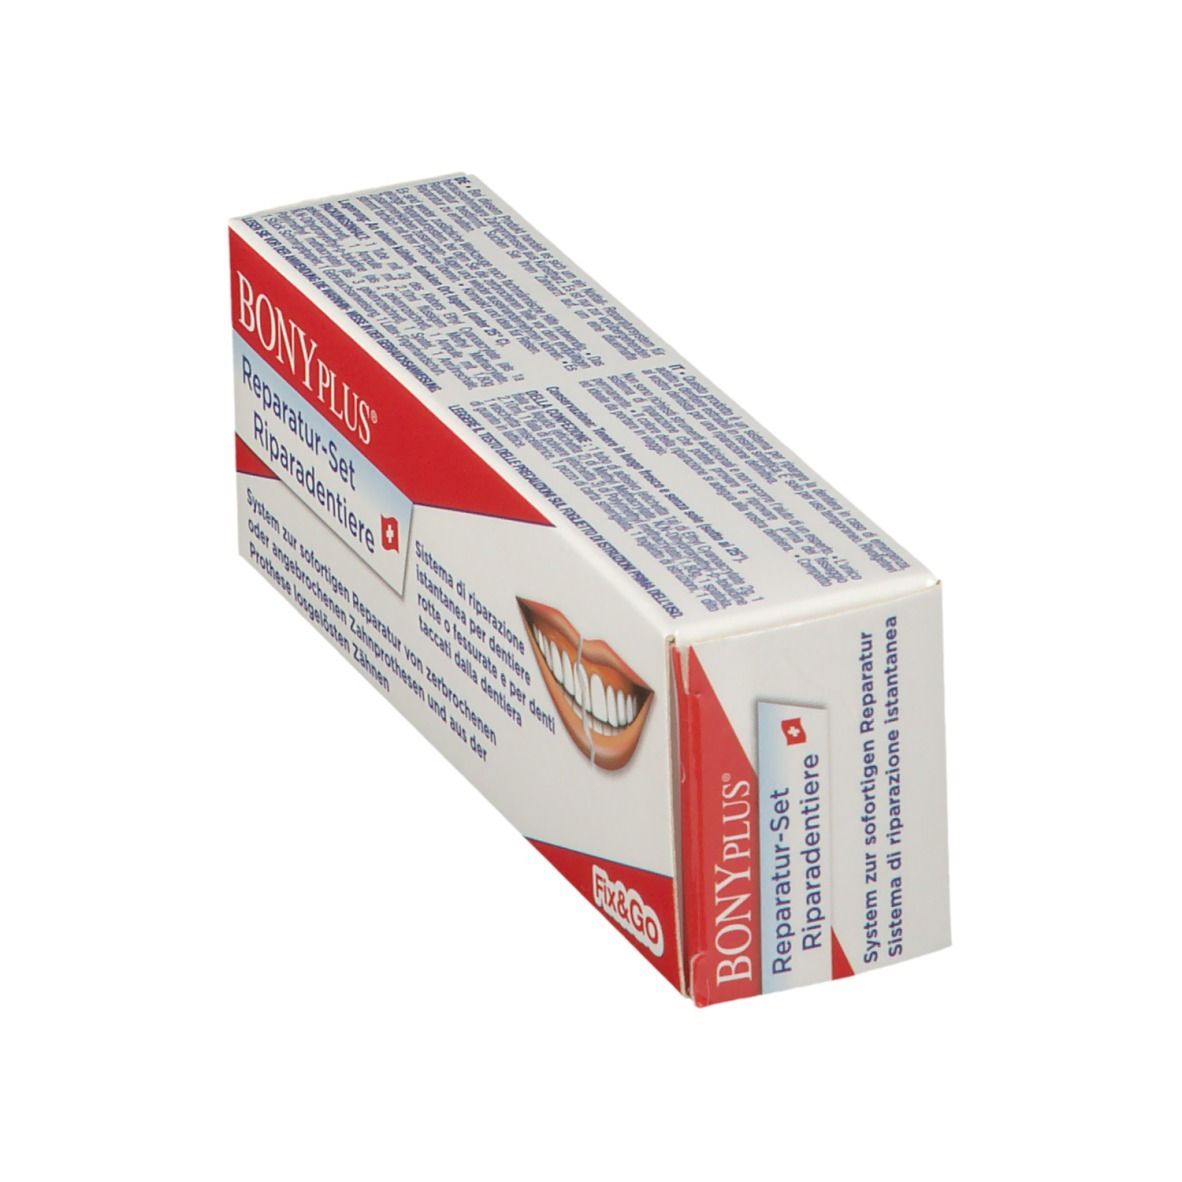 BONYplus® Reperatur-Set für Zahnprothesen 1 St - SHOP APOTHEKE